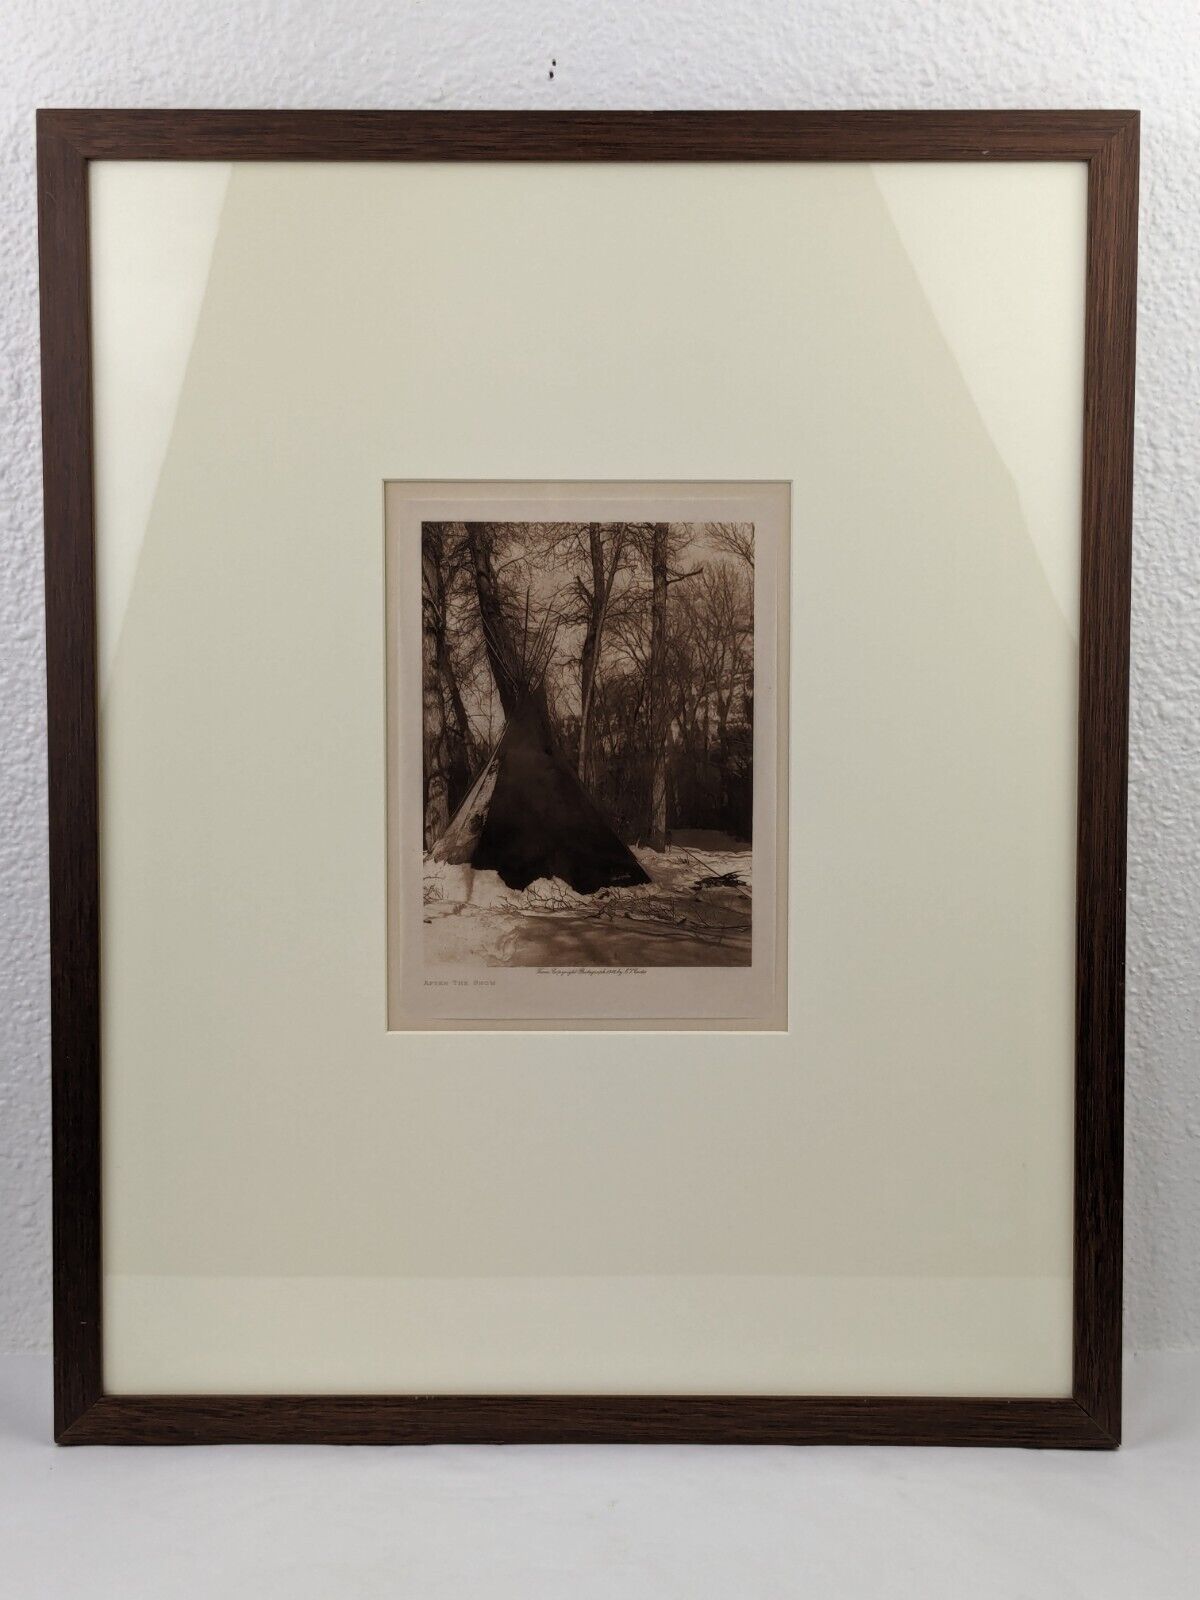 Vtg 1908 Original Photogravure - After The Snow - Edward Curtis - 5 1/2 x 7 1/2